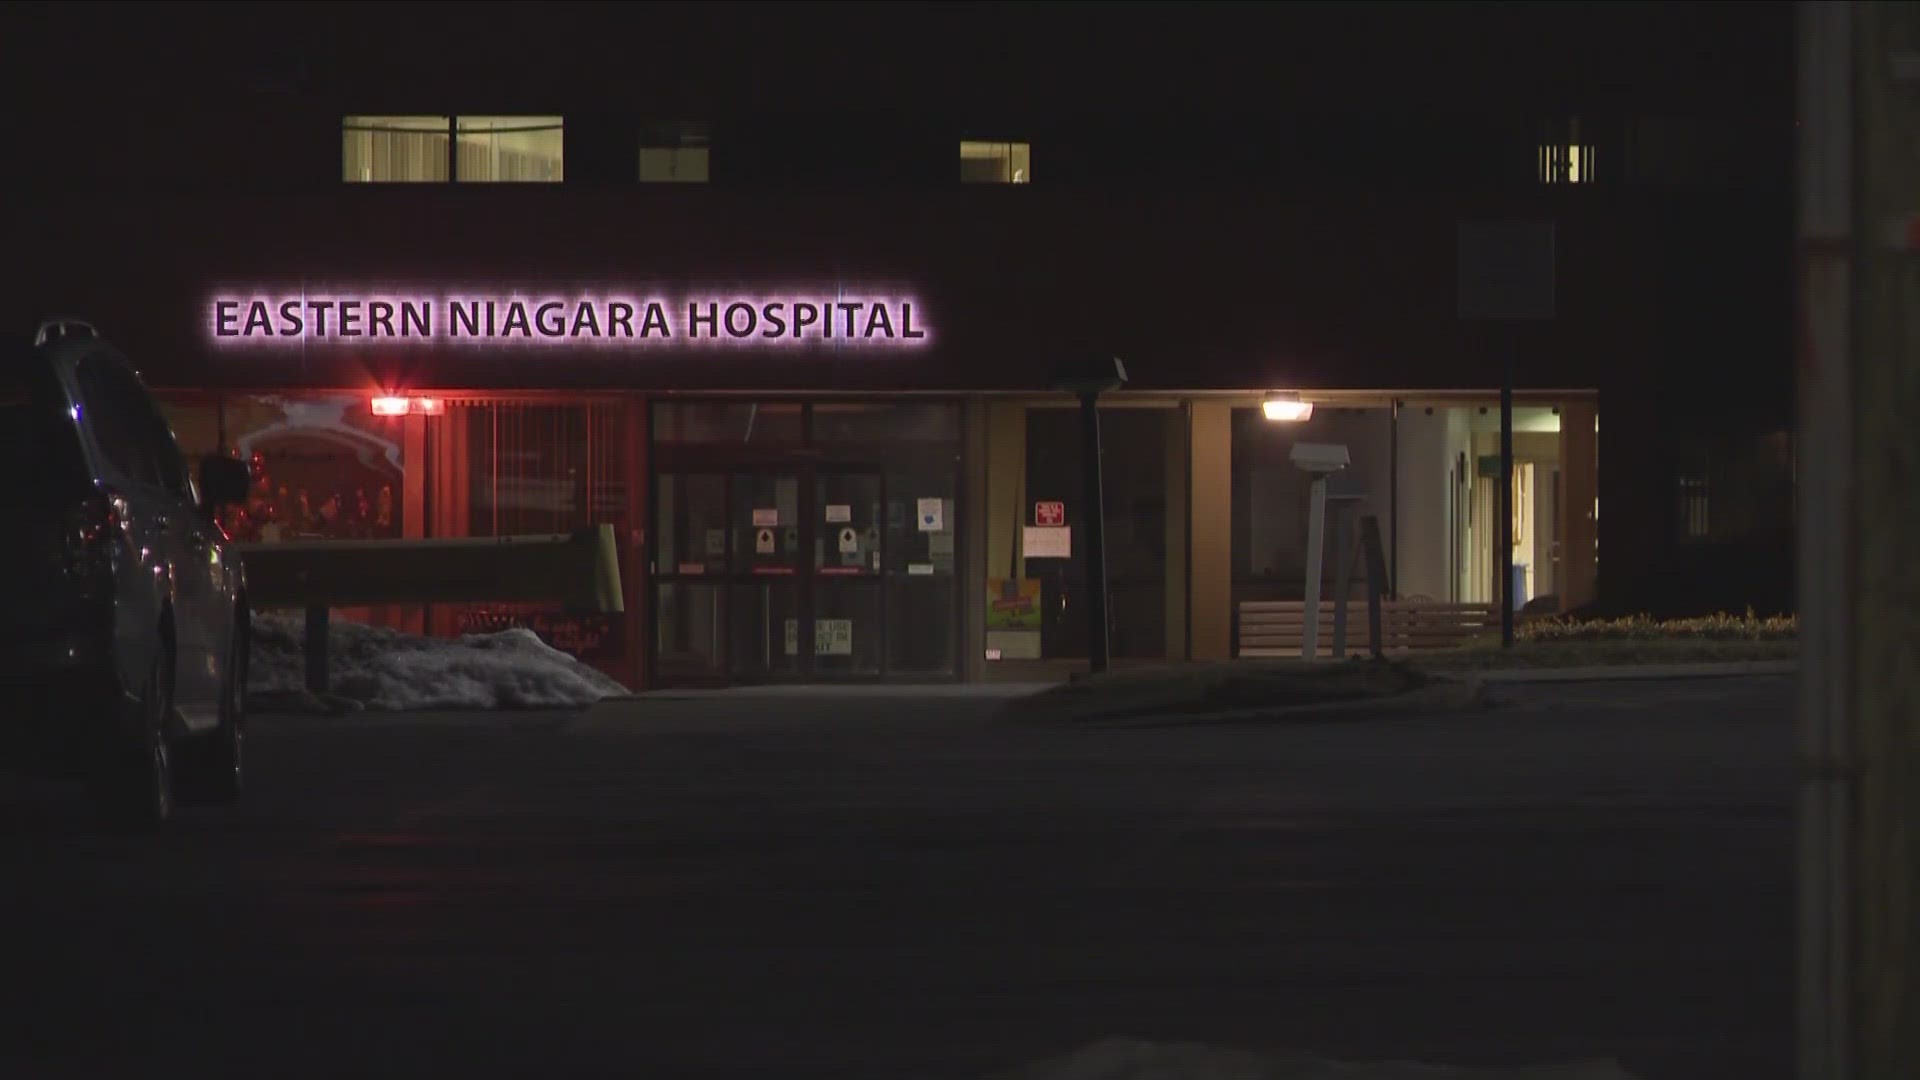 Eastern Niagara hospital is set to close on June 17